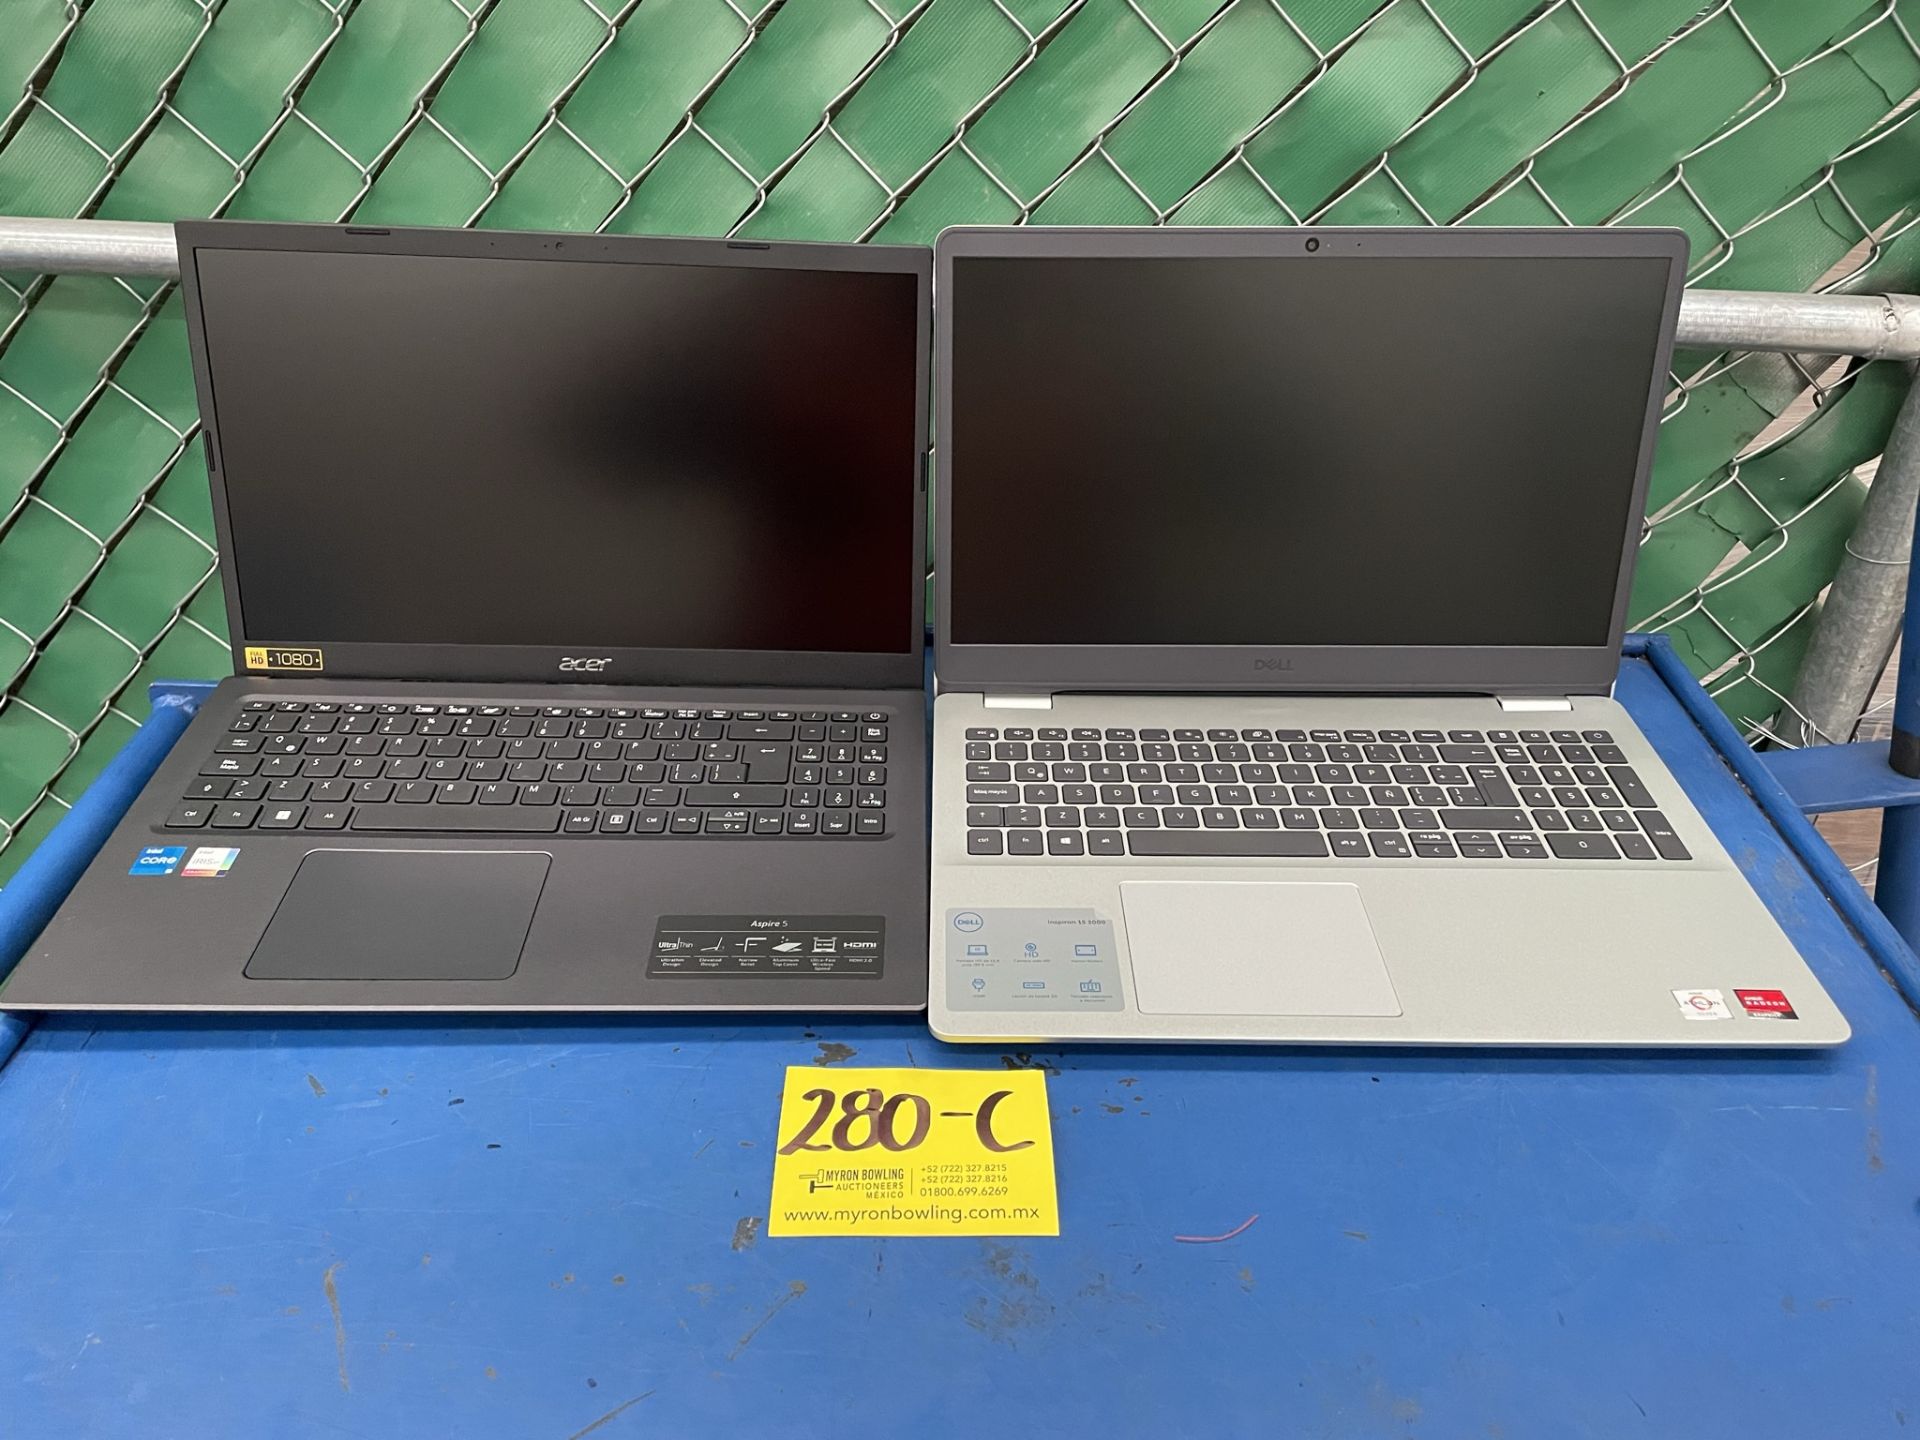 (EQUIPO NUEVO) Lote De 2 Laptops Contiene: 1 Laptop Marca DELL, Modelo I3505, Serie N/D, SO WINDOWS